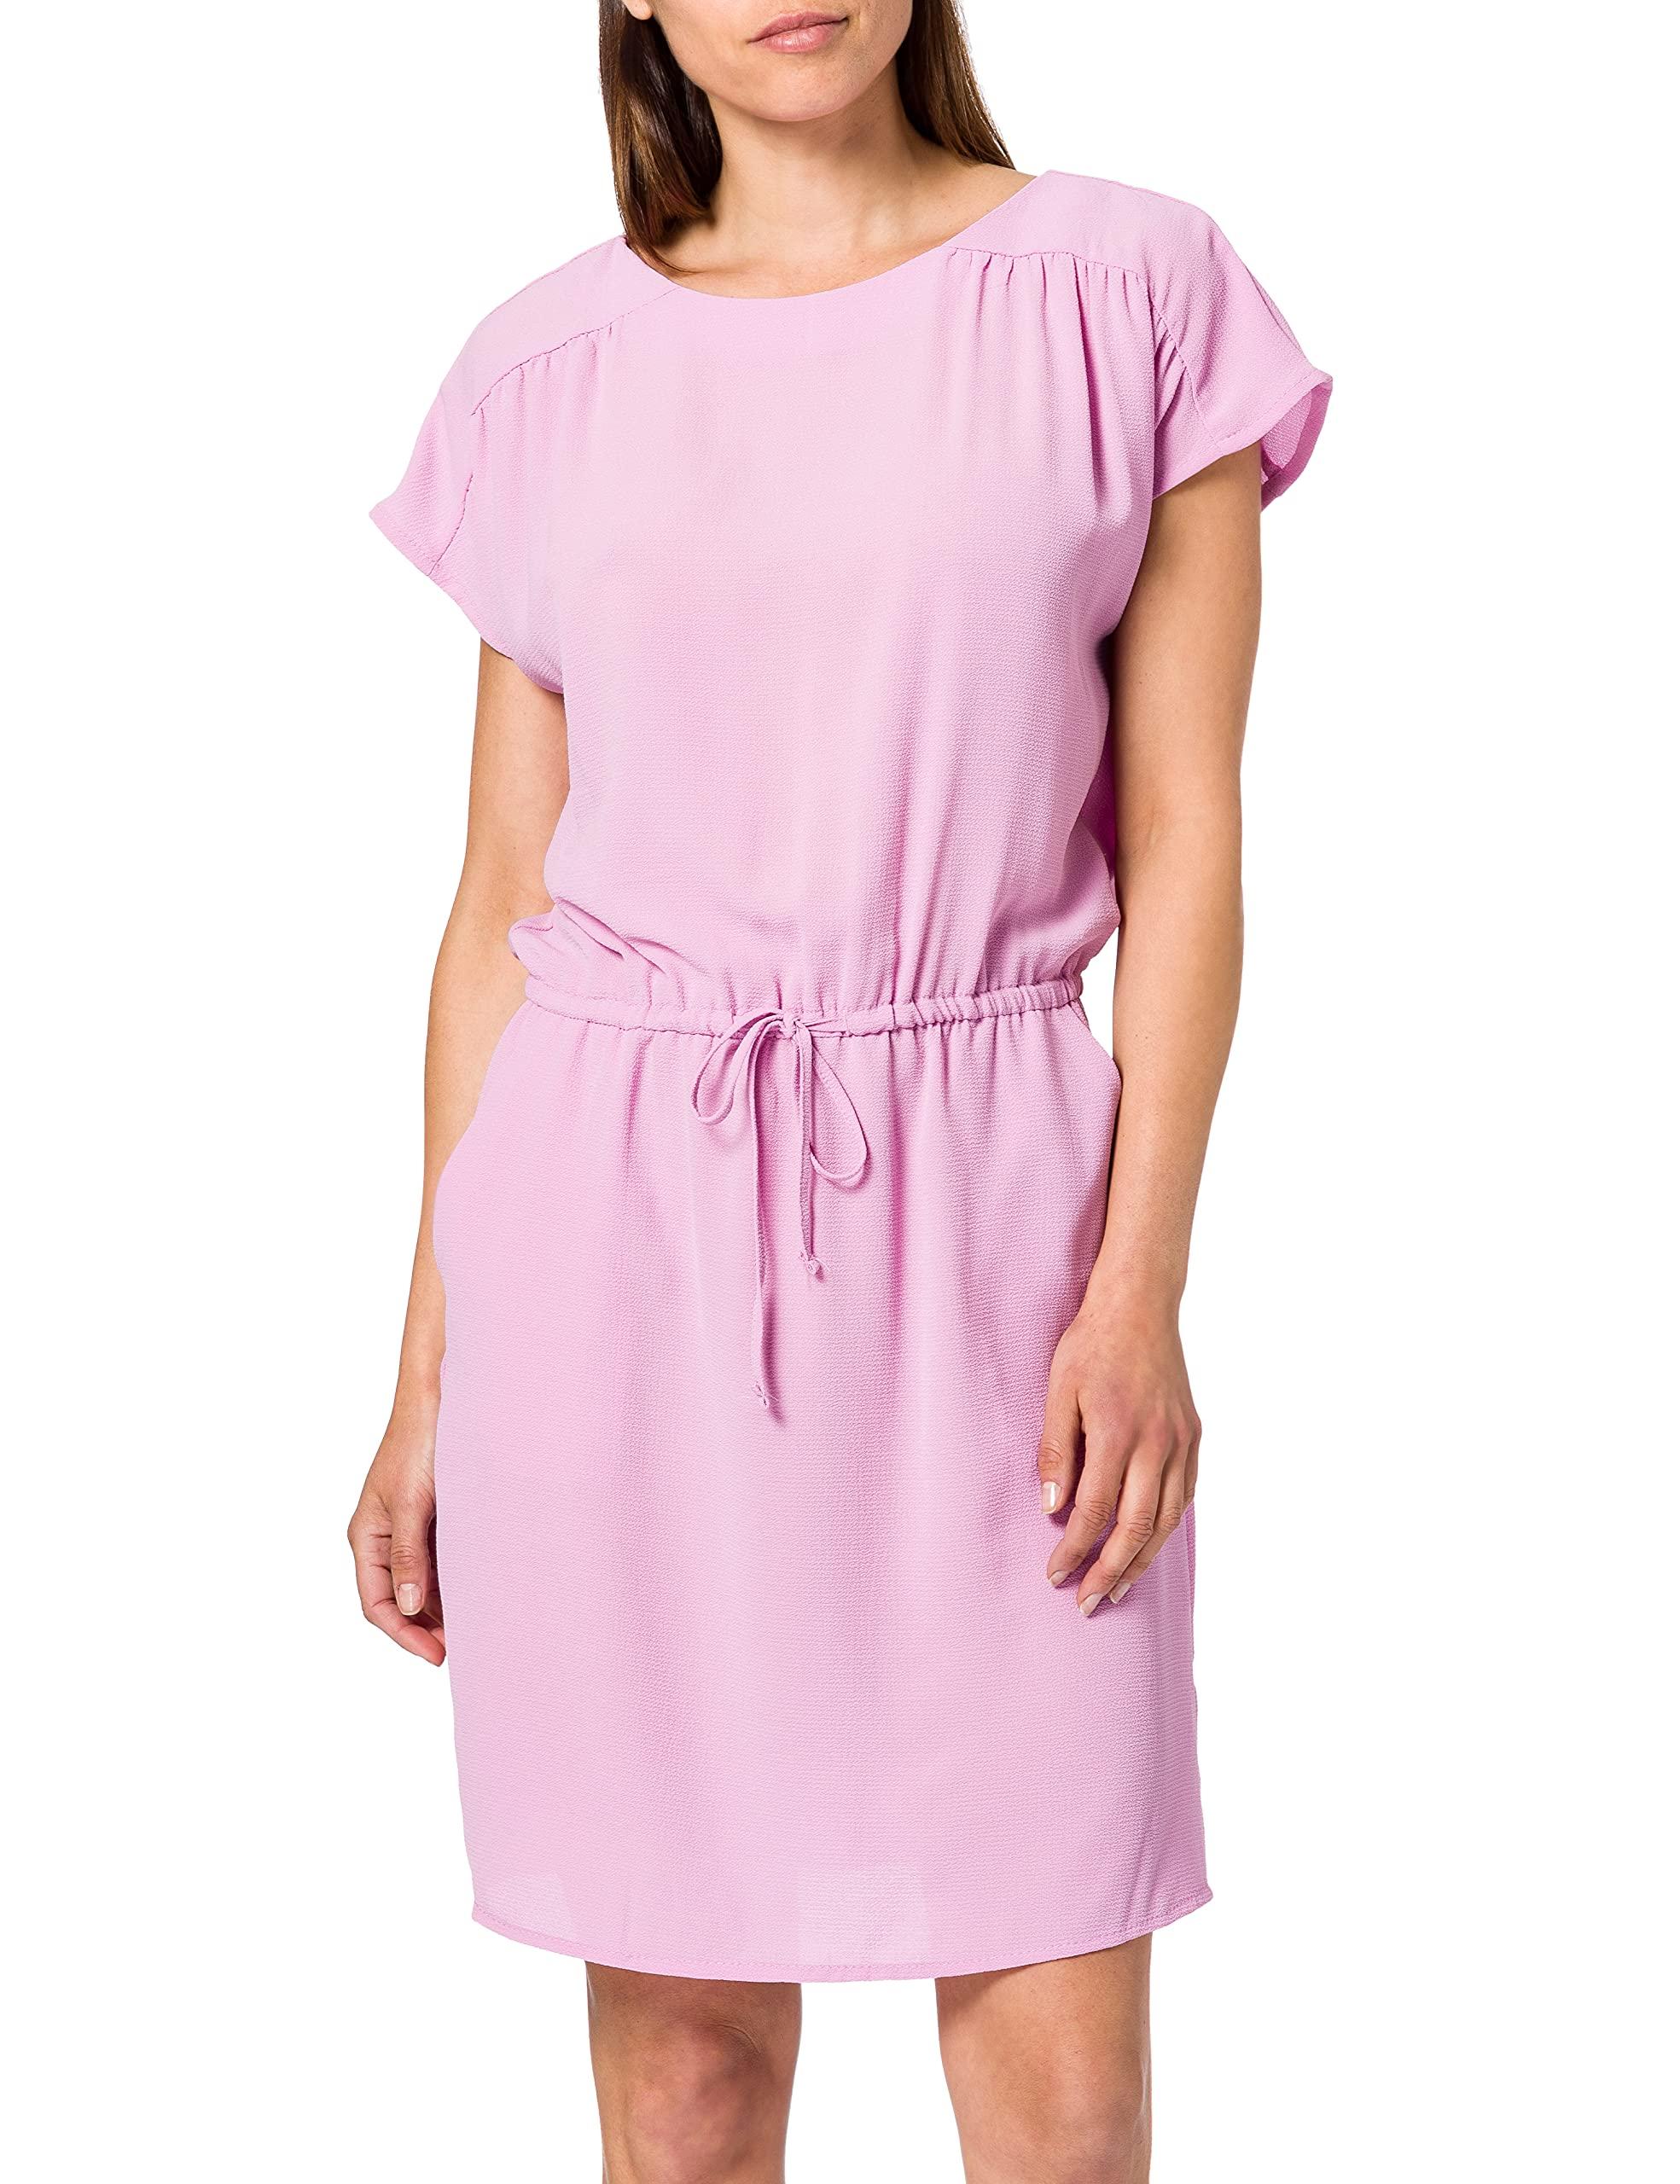 Vero Moda Vmsasha Bali Ss Short Dress Color in Pastel Lavender (Pink) - Lyst